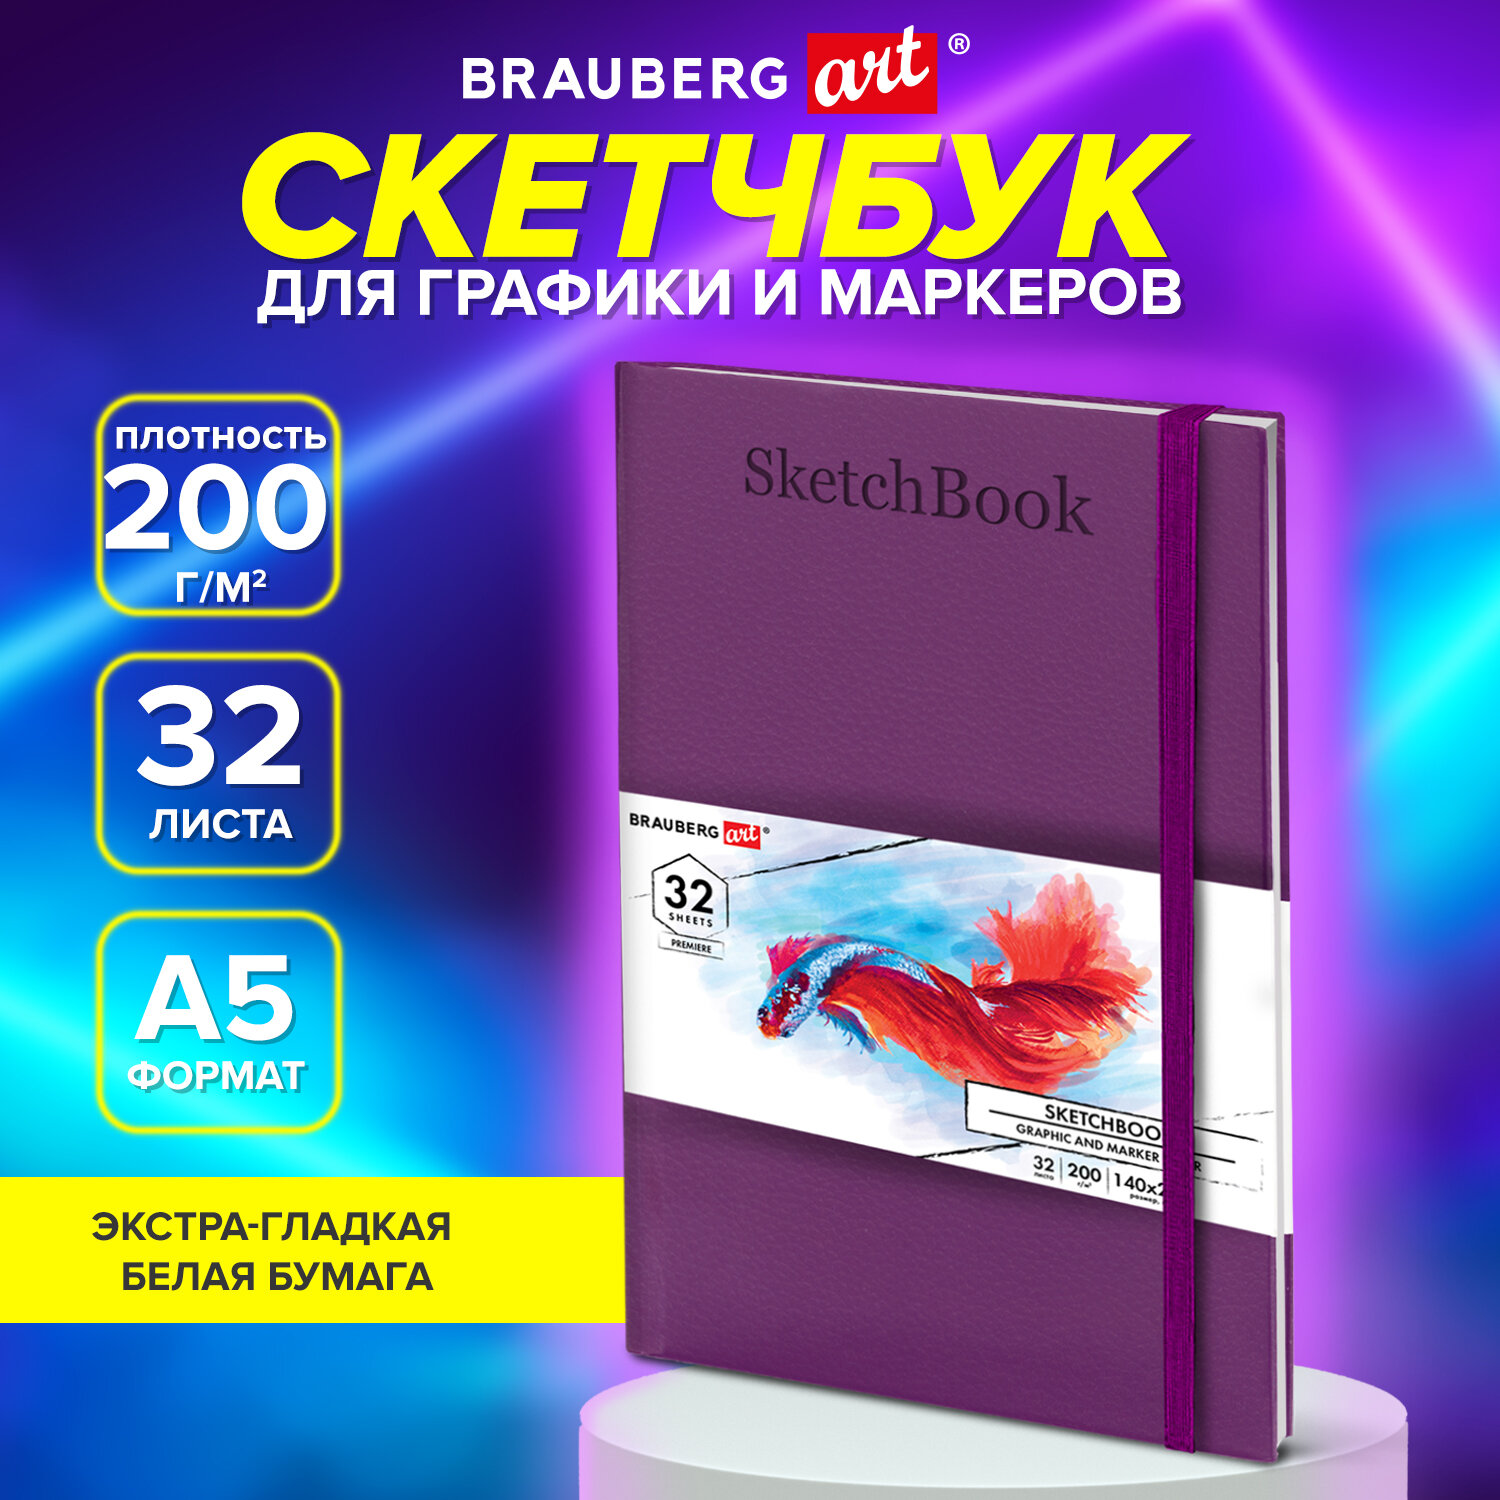 Скетчбук для графики и маркеров Brauberg Art 115098, 200г/м,140х210мм, 32л, кожзам